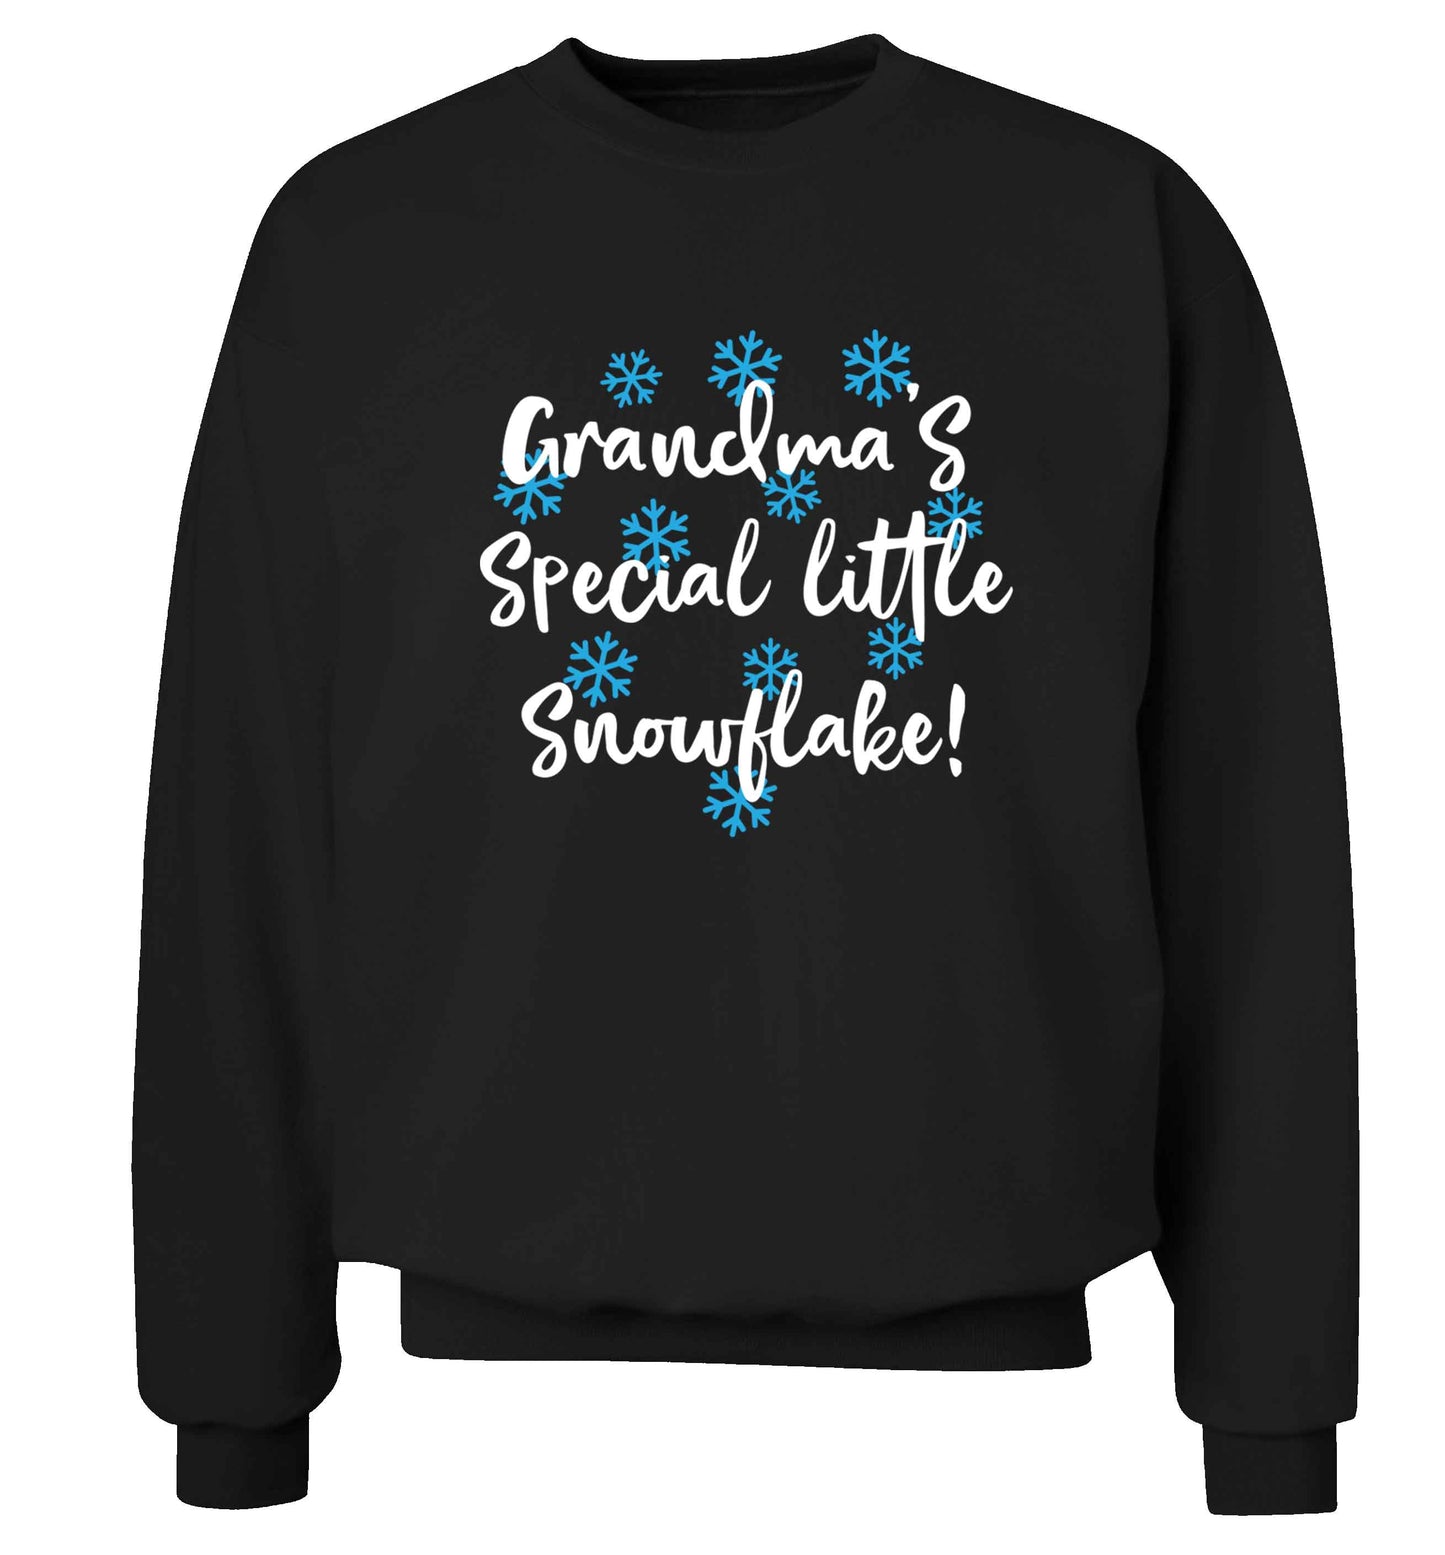 Grandma's special little snowflake Adult's unisex black Sweater 2XL